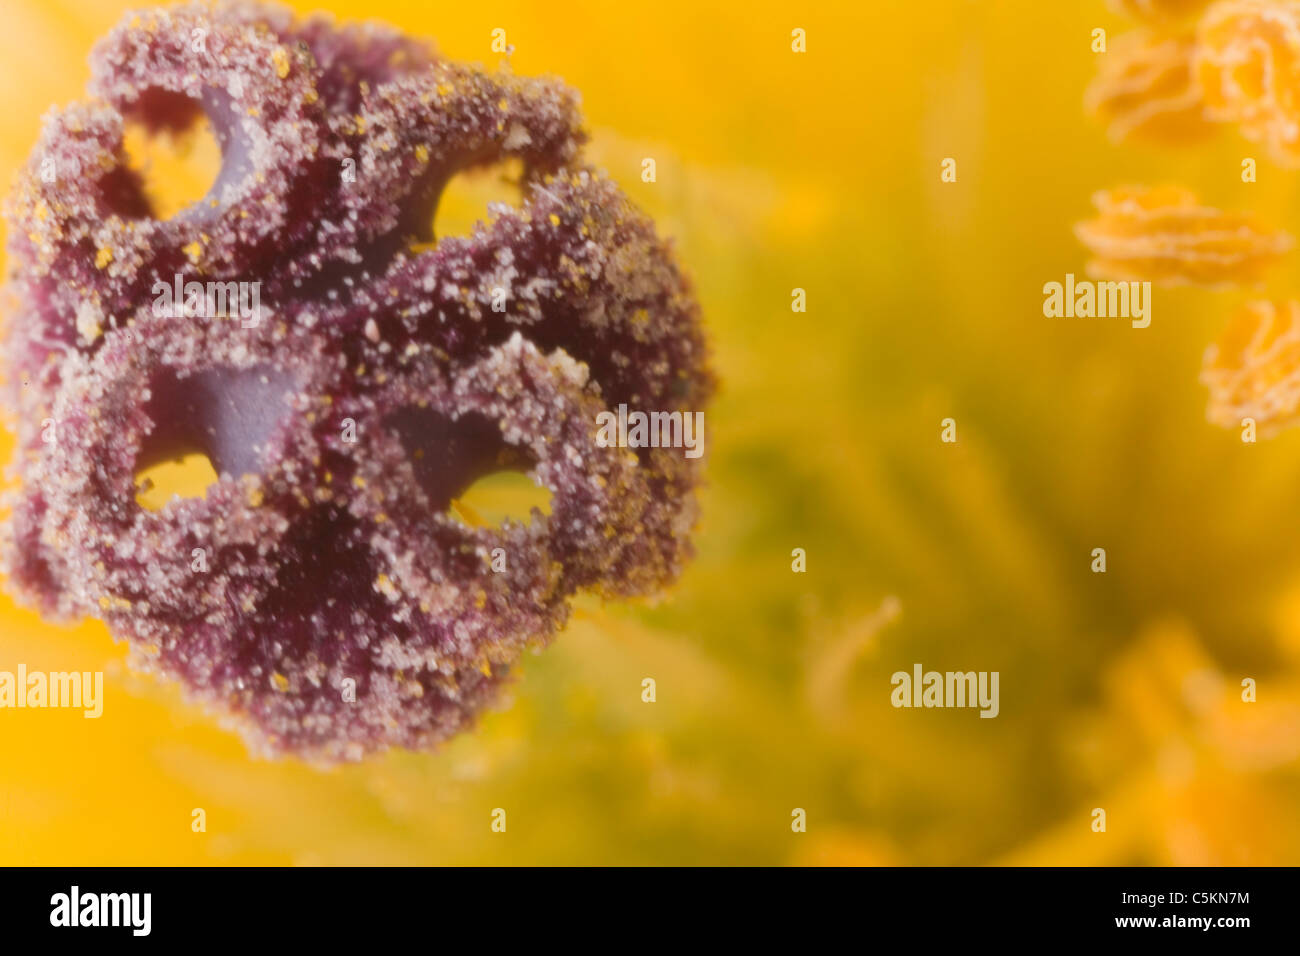 Argemone corymbosa or Argemone munita; Prickly Poppy; Death Valley, CA Stock Photo